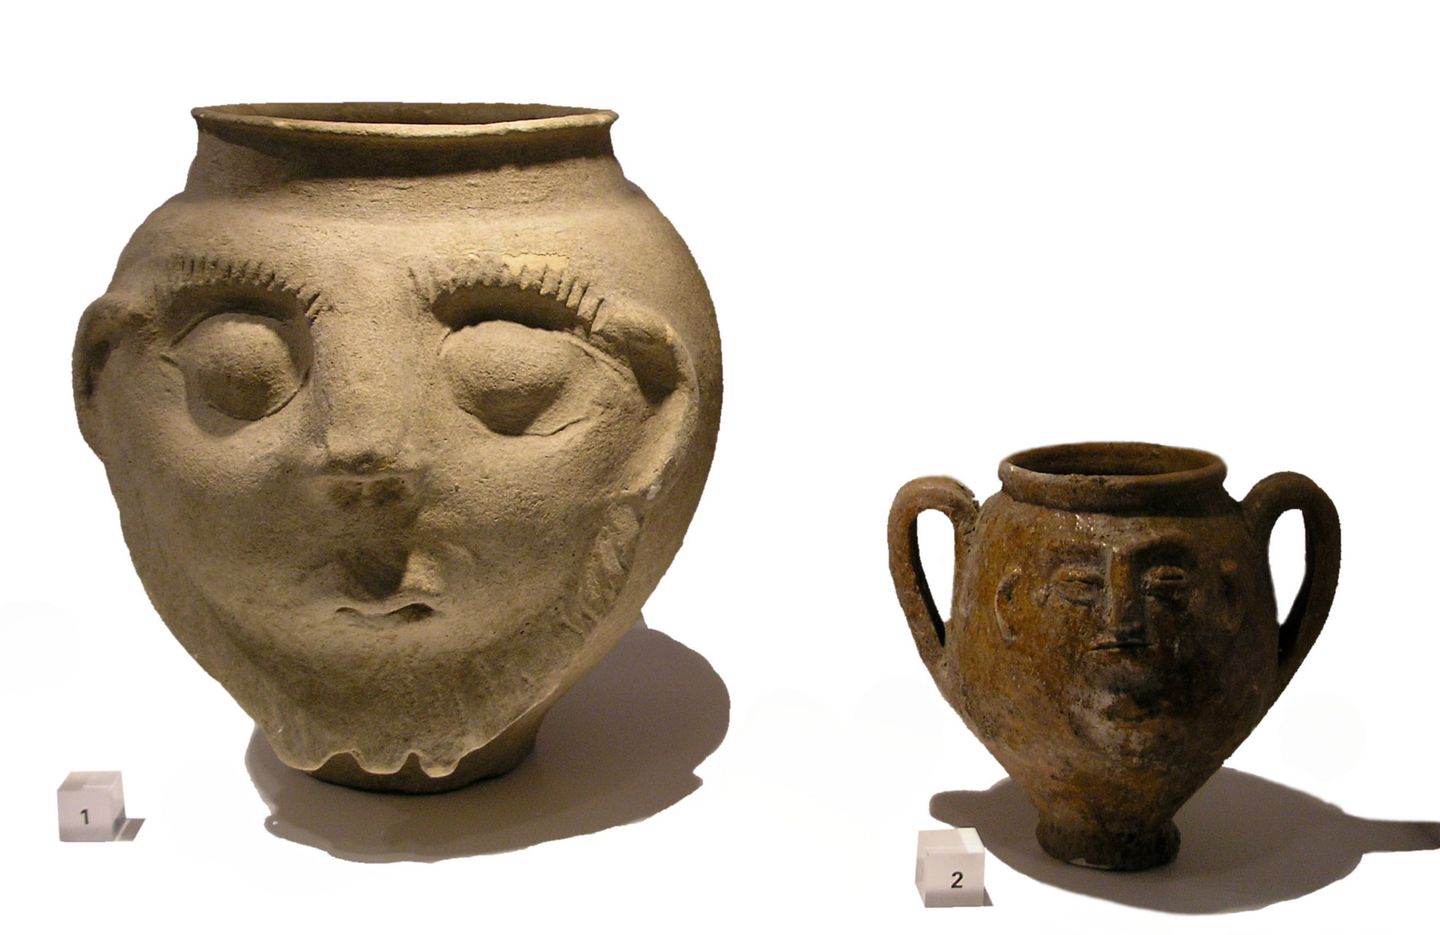 Roman face pot artefacts